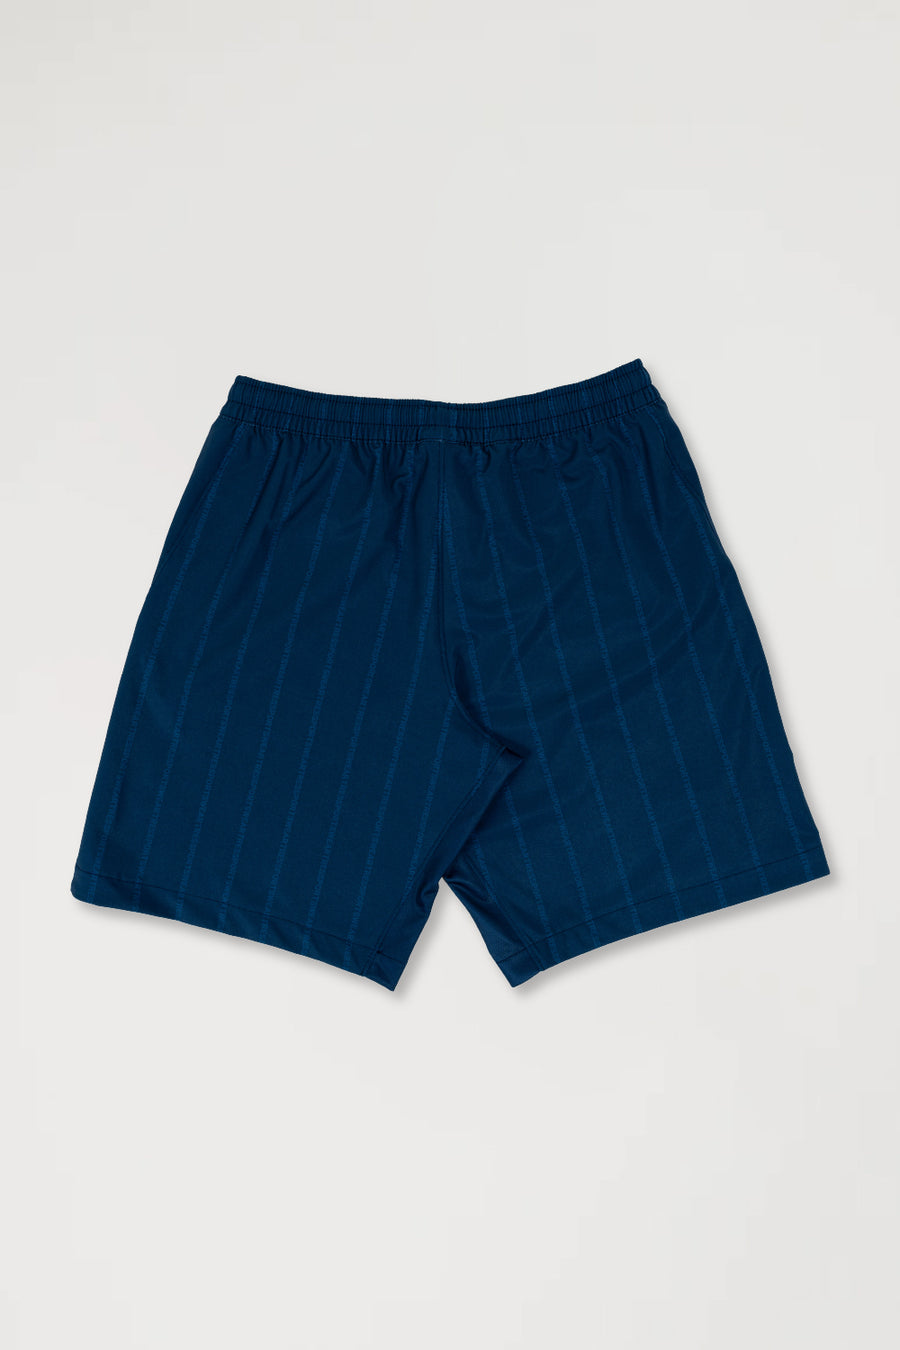 【23SS】TRESTRIPES Woven shorts(Navy)